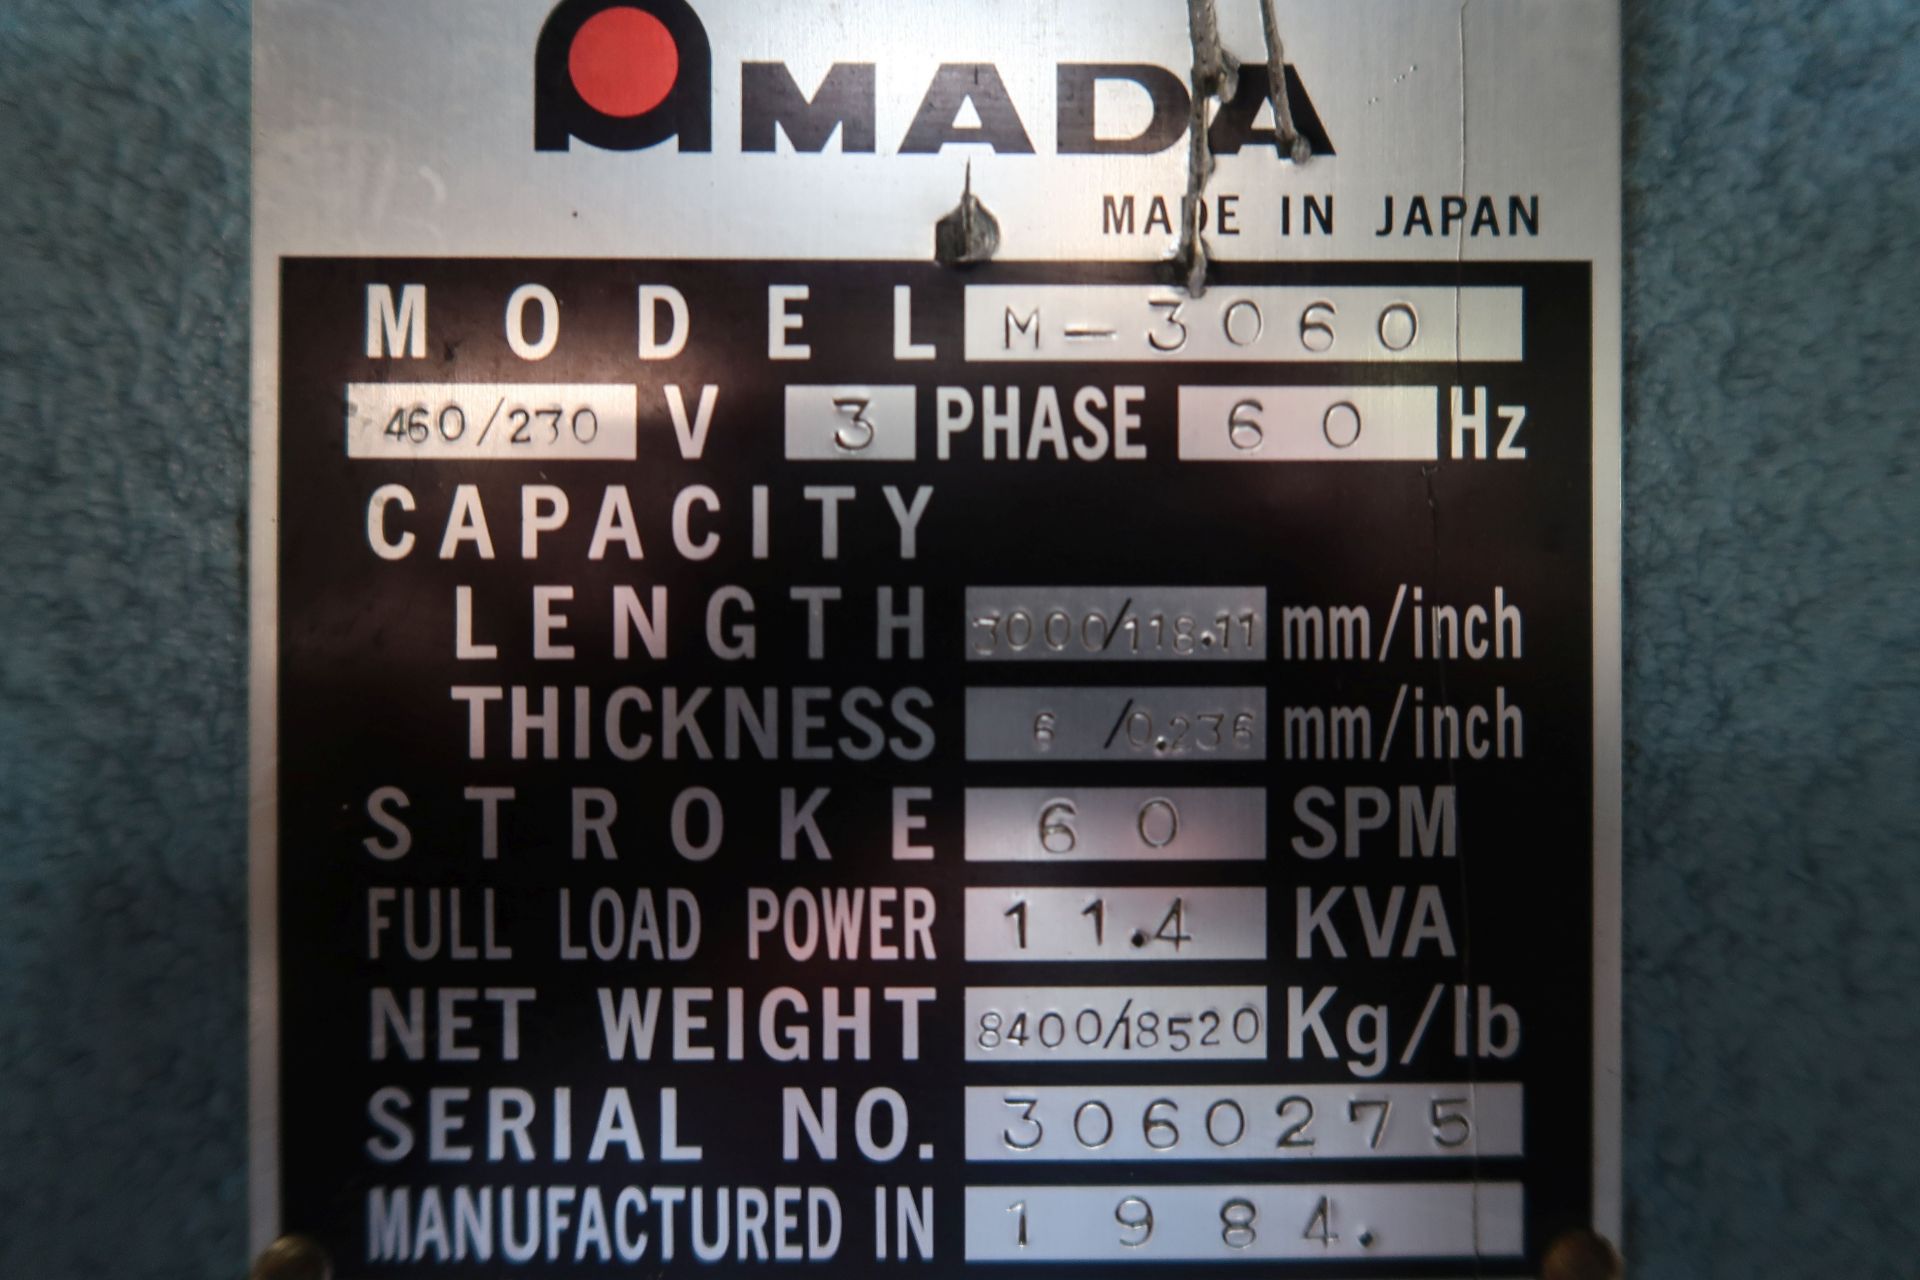 1/4" X 10' AMADA MODEL M-3060 SQUARING SHEAR; S/N 3060275 (NEW 1984), 3000/118.11 MM/INCH, 6/0.236 - Image 18 of 18